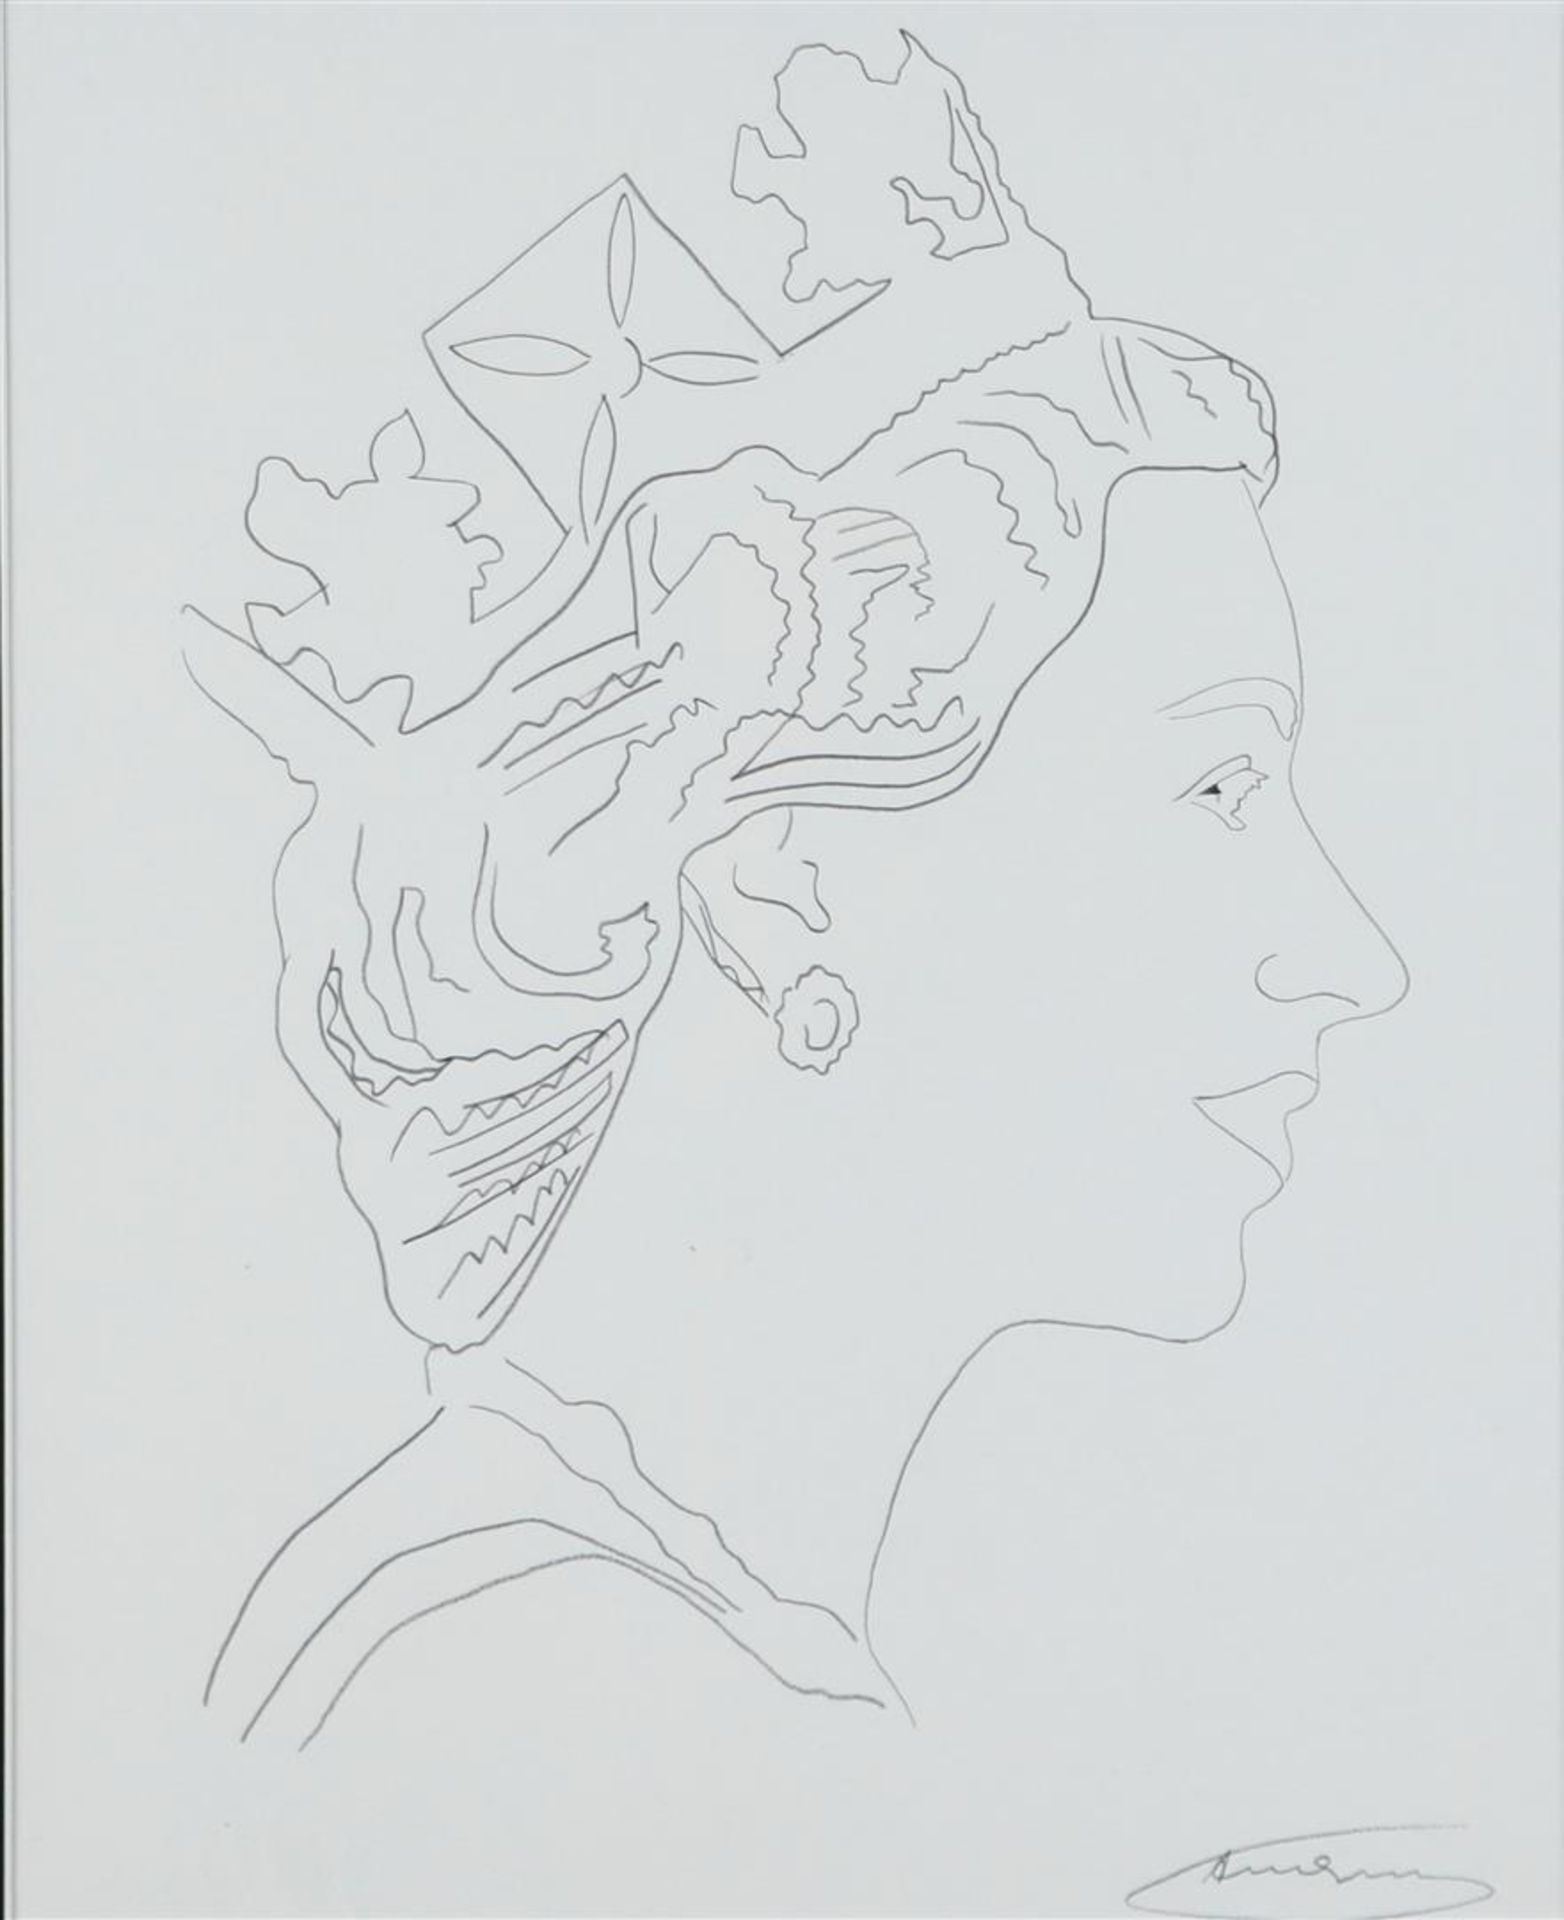 Andy Warhol Pittsburg, Pennsylvania 1928 - 1987 New York) (after), Portrait of Queen Elizabeth II